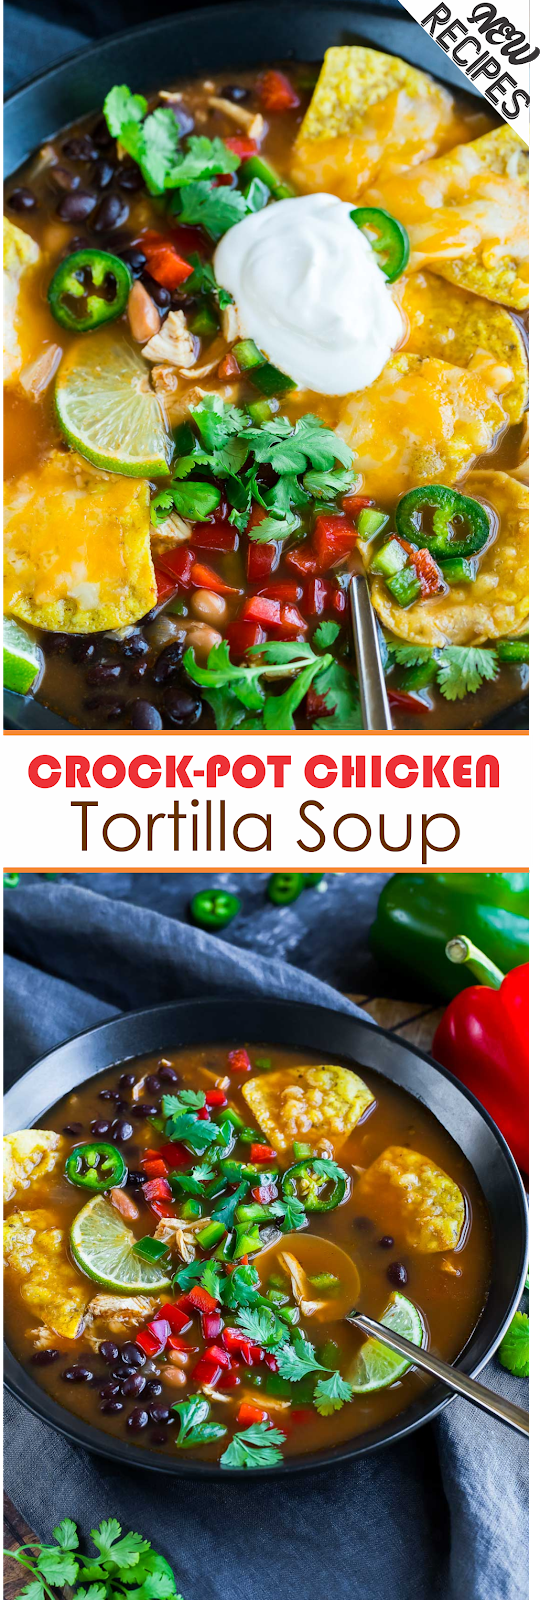 Crock-pot Chicken Tortilla Soup | Show You Recipes